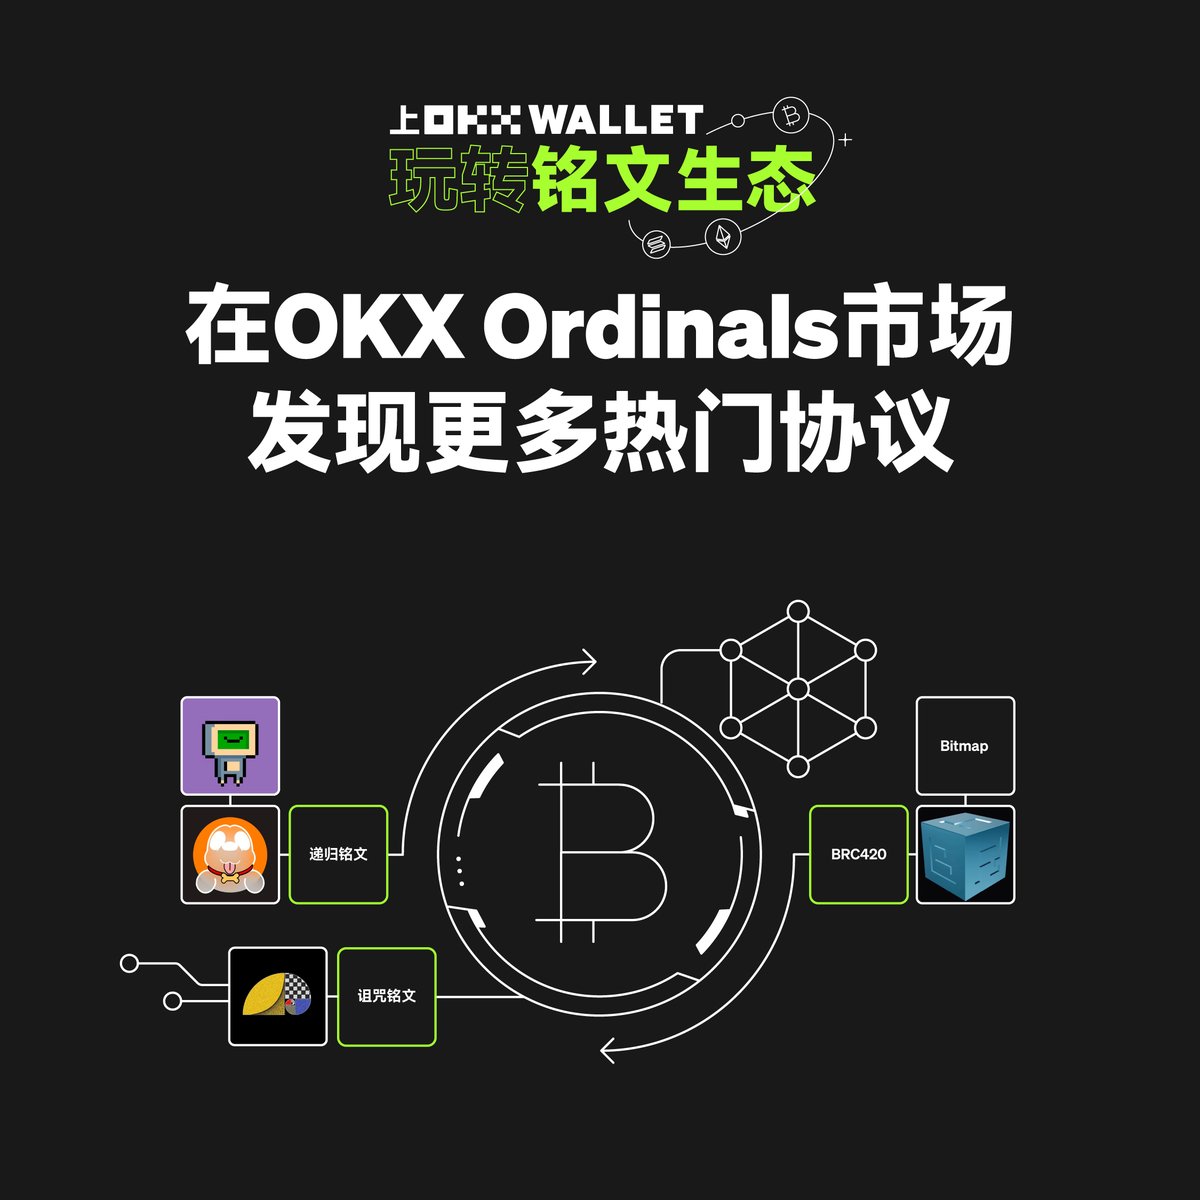 #OKXWeb3 钱包 #Ordinals 市场现已支持递归铭文、诅咒铭文、BRC420等多个热门协议！ 💡你最看好哪个呢？